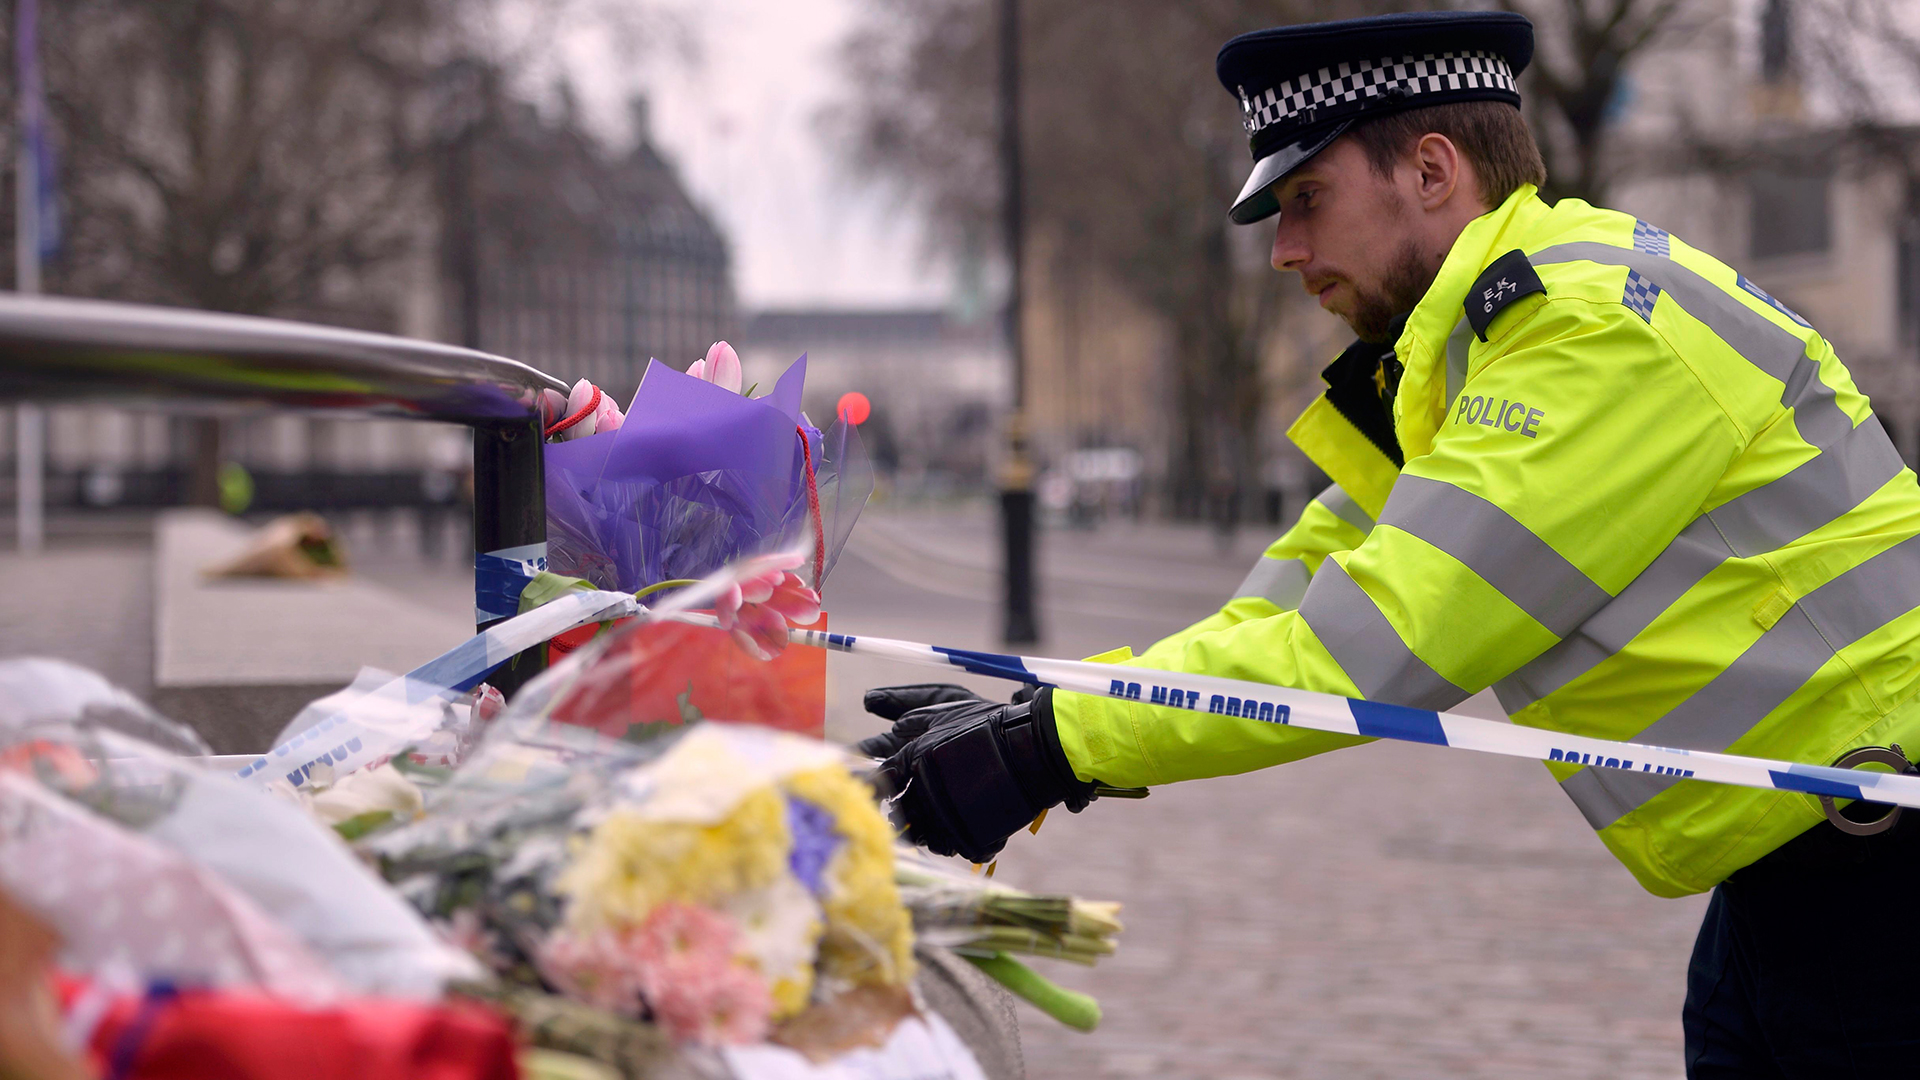 Identificado el atacante de Londres: Khalid Masood, un hombre de 52 años, natural de Kent